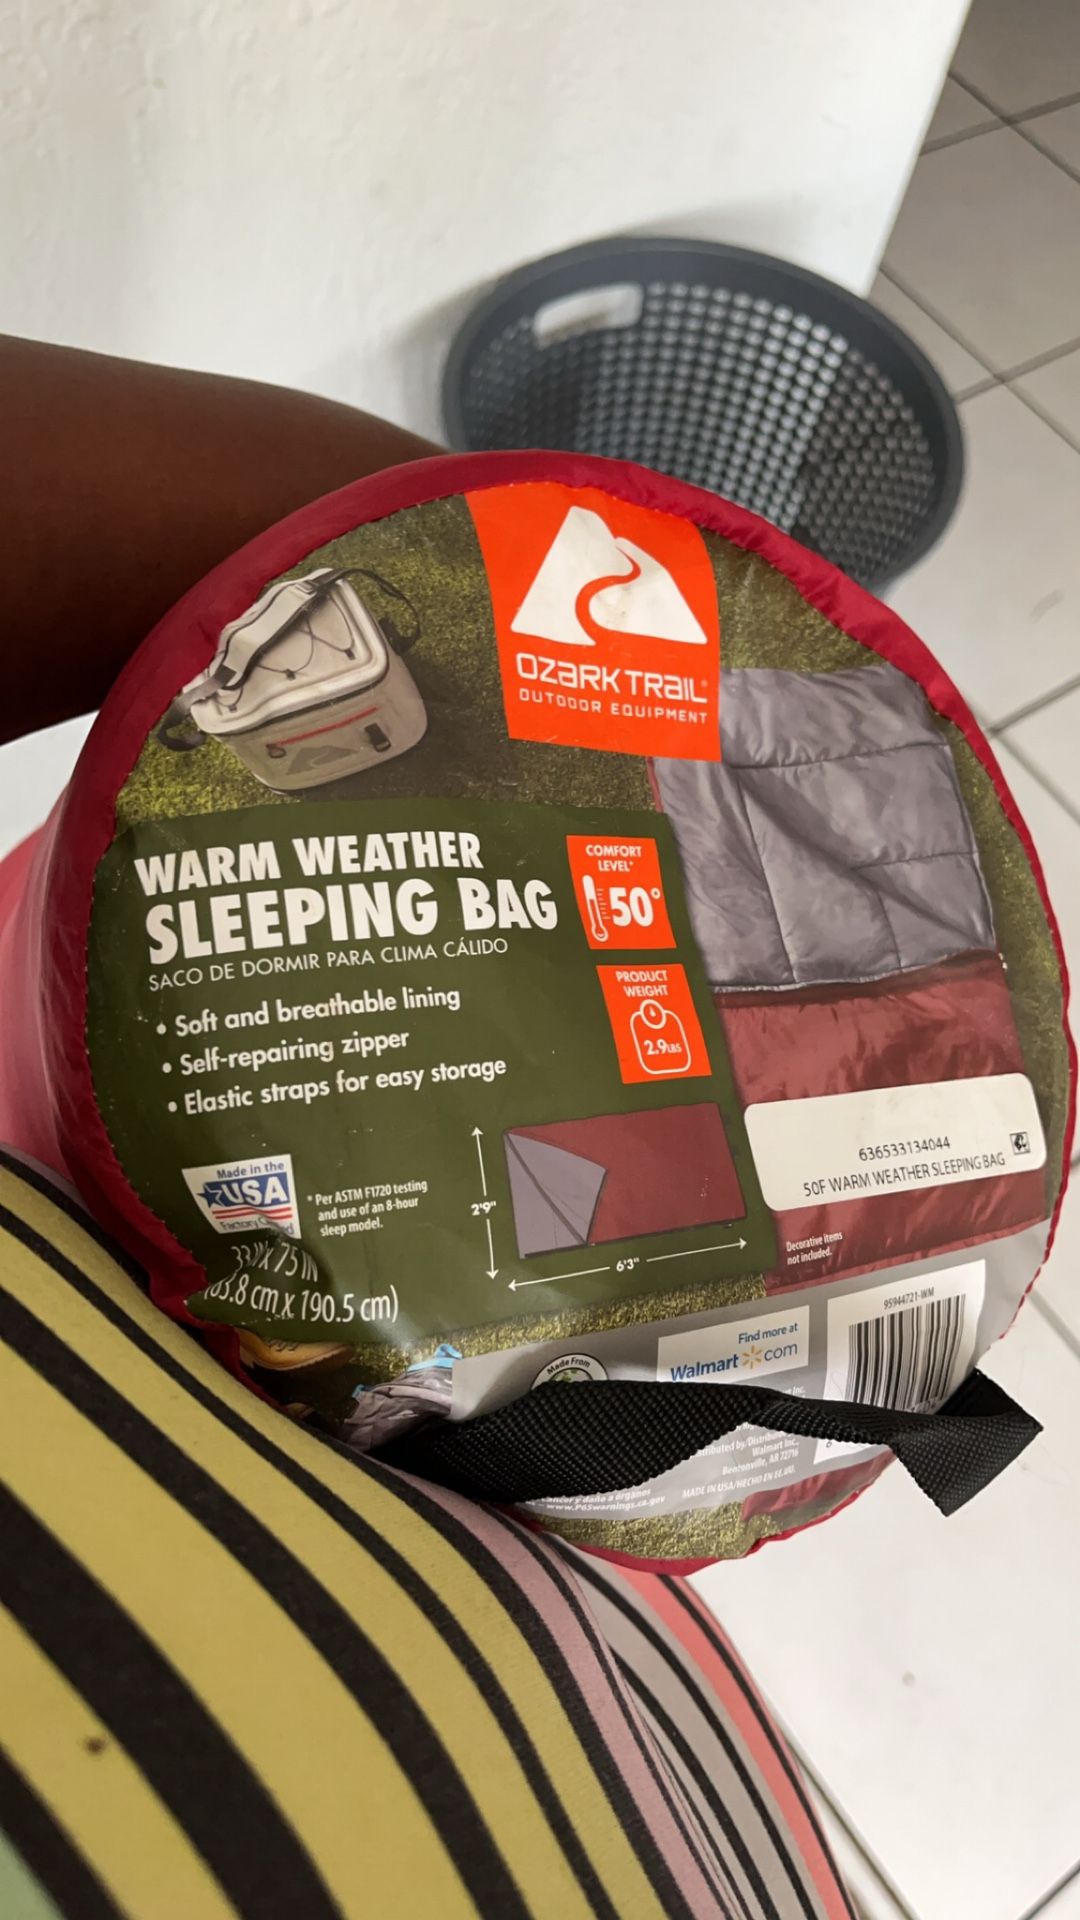 Sleeping Bag Used Once